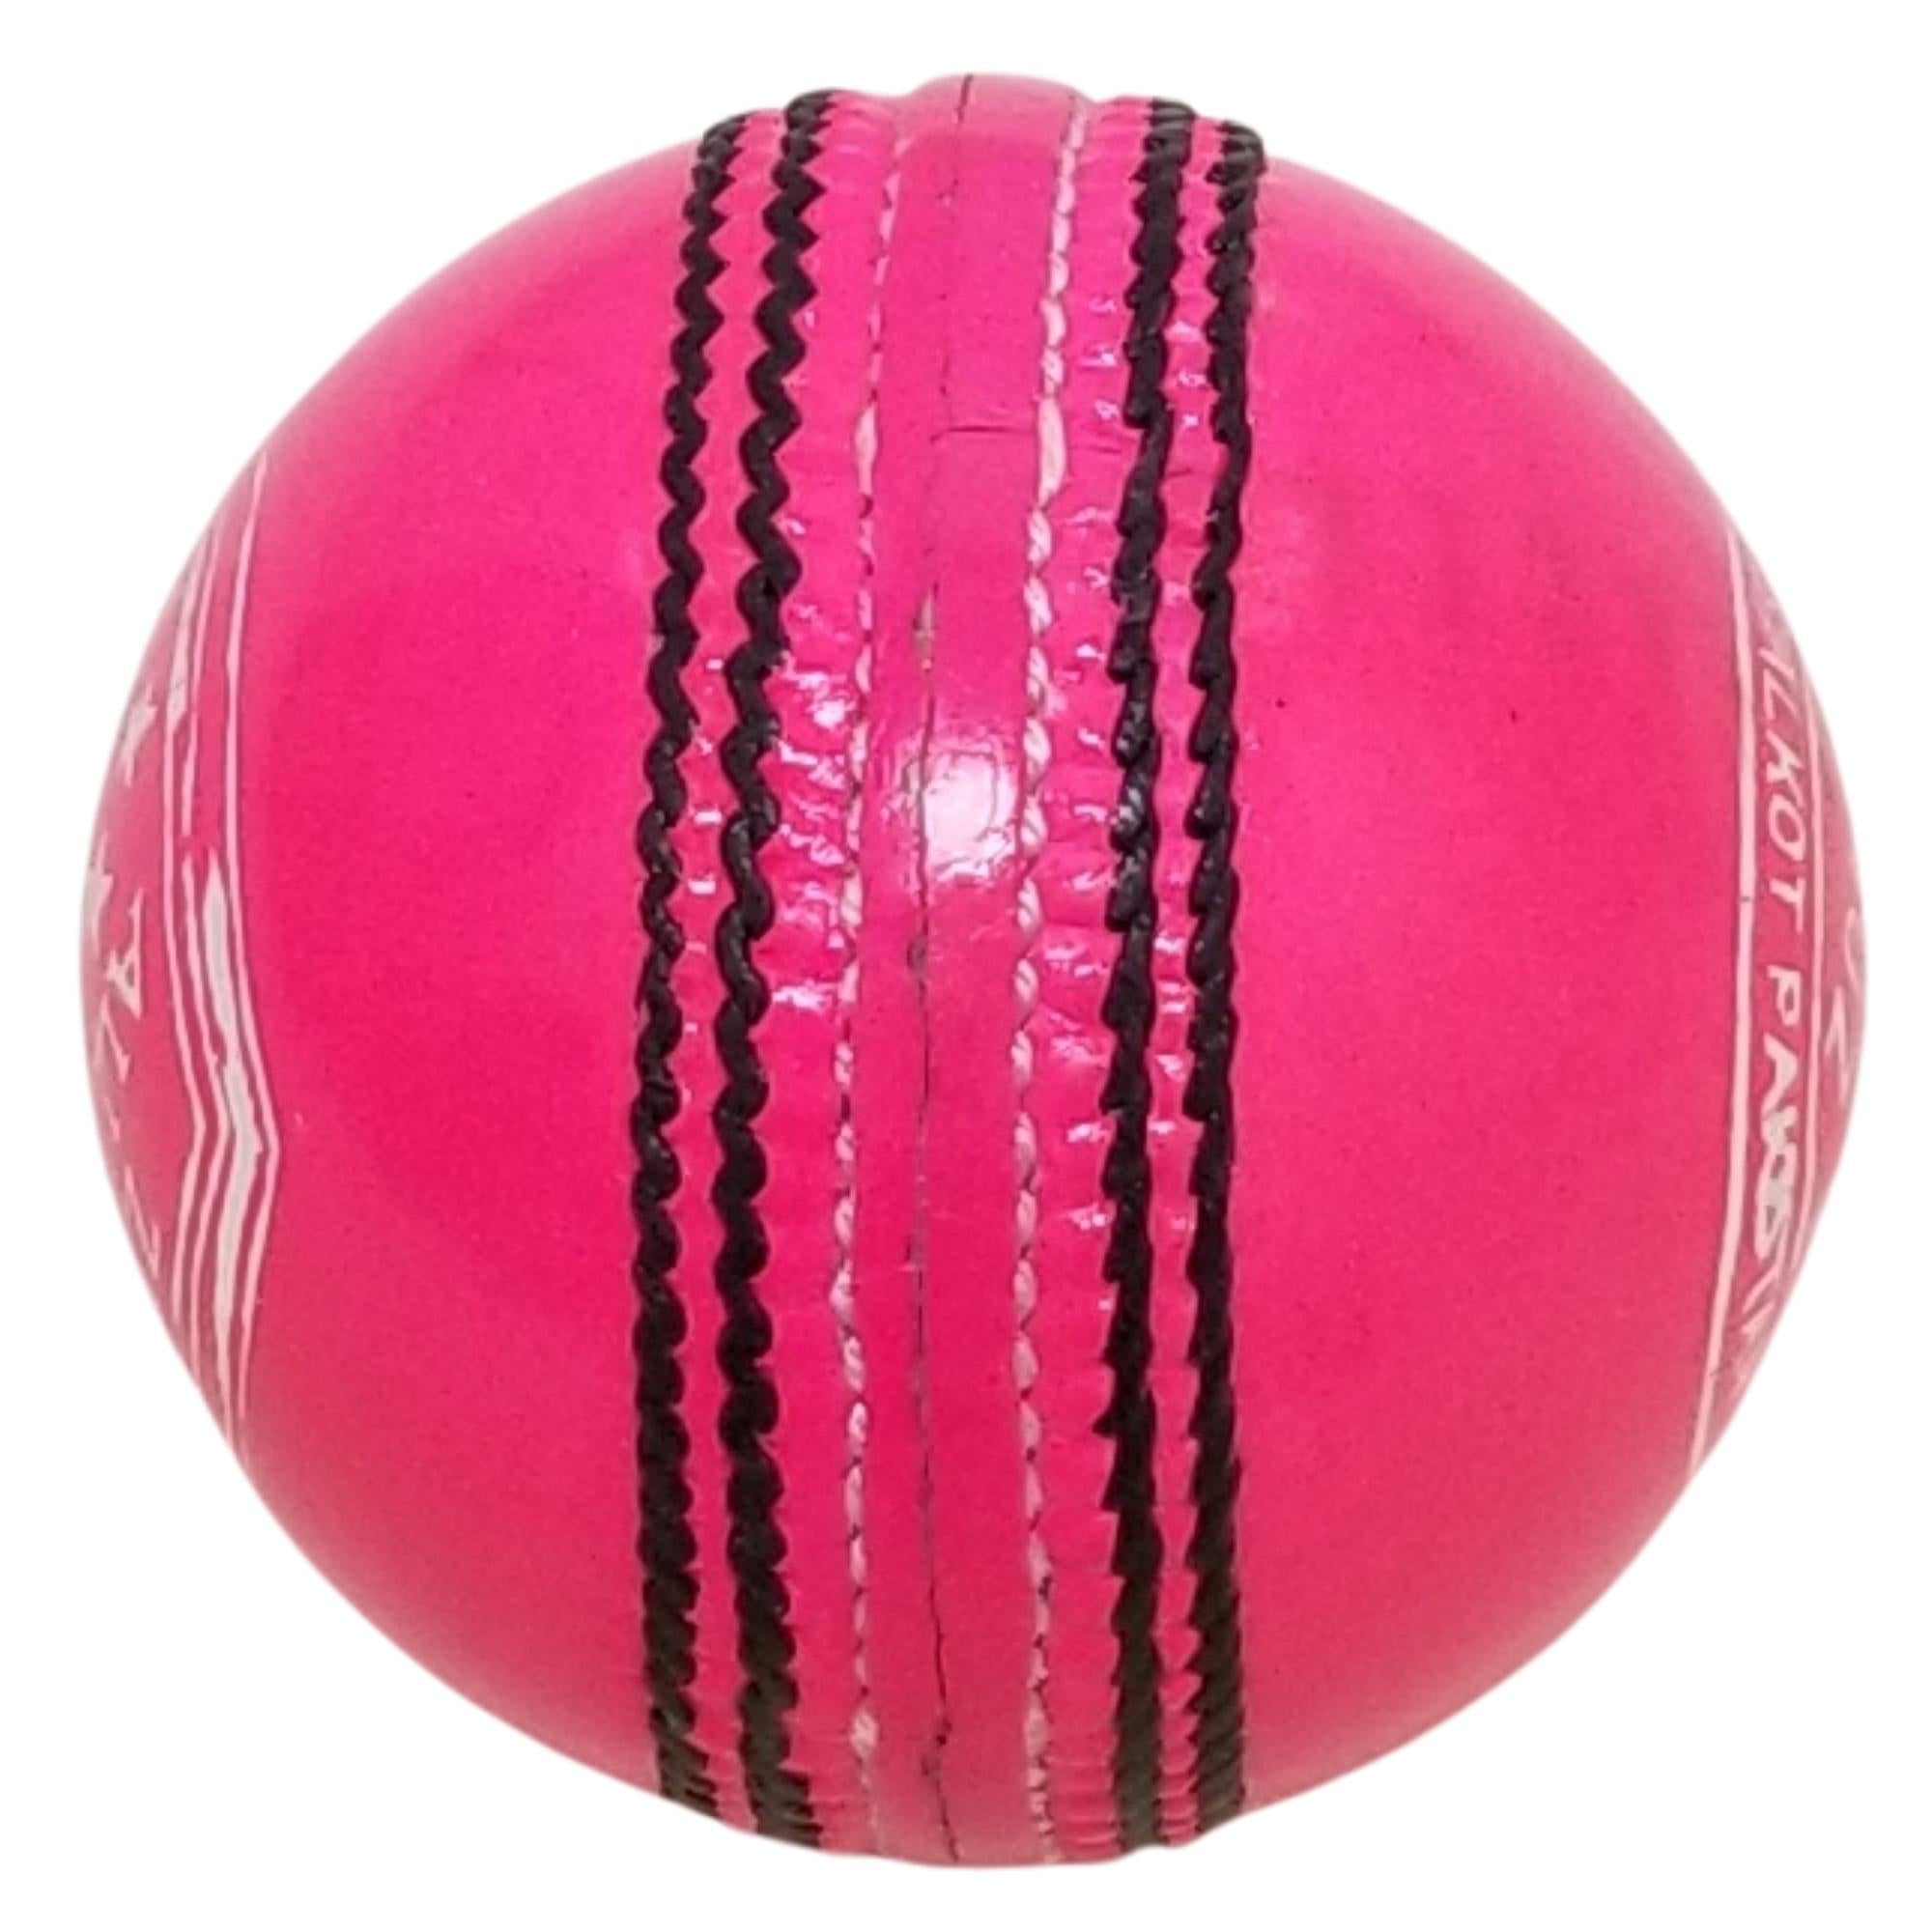 Zee Sports Pink Cricket Balls